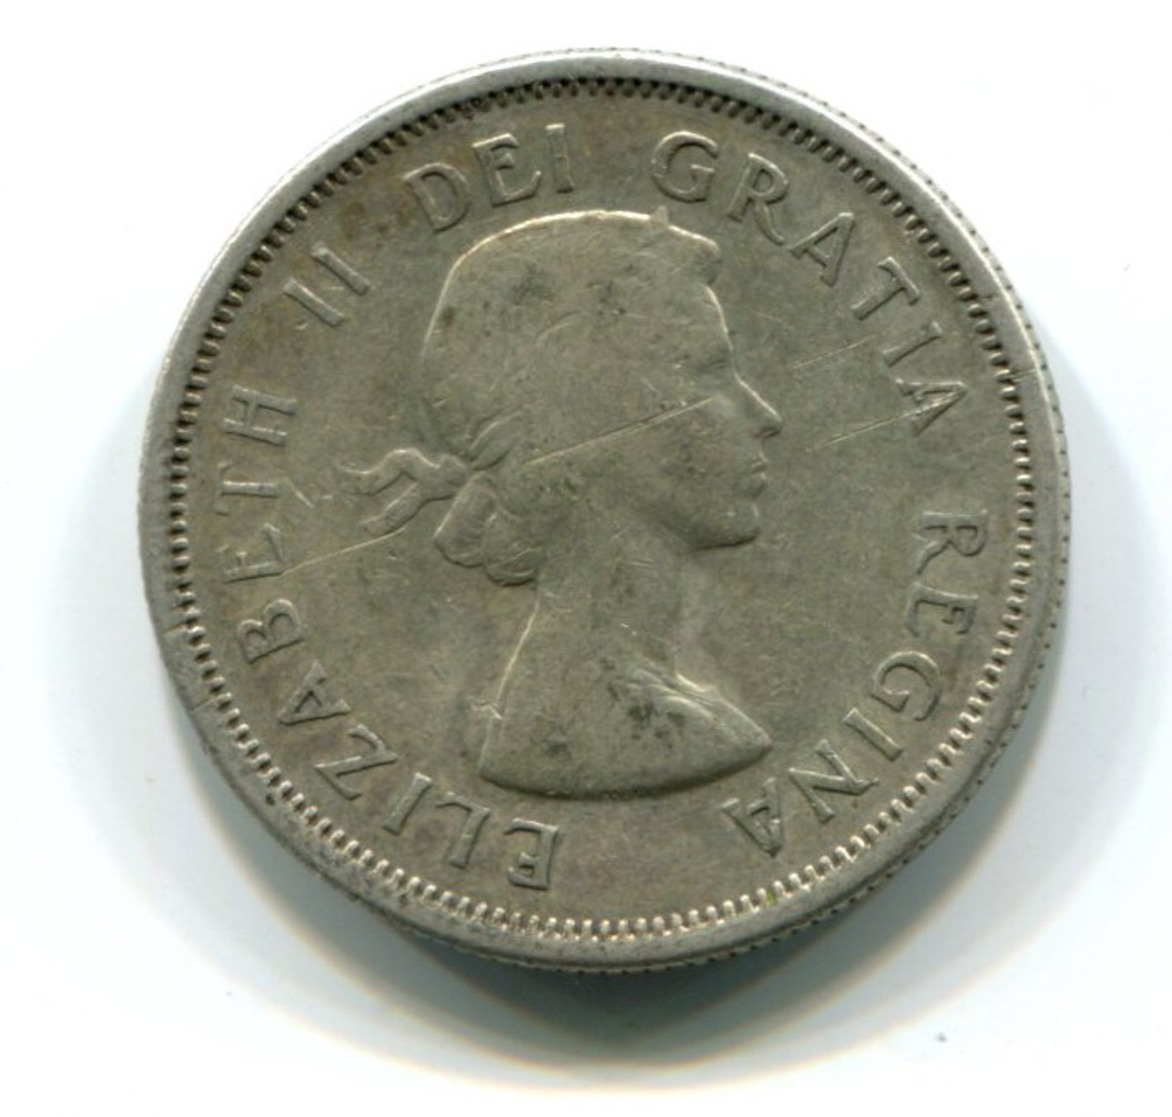 1952 Canada Silver 25 Cent Coin - Canada